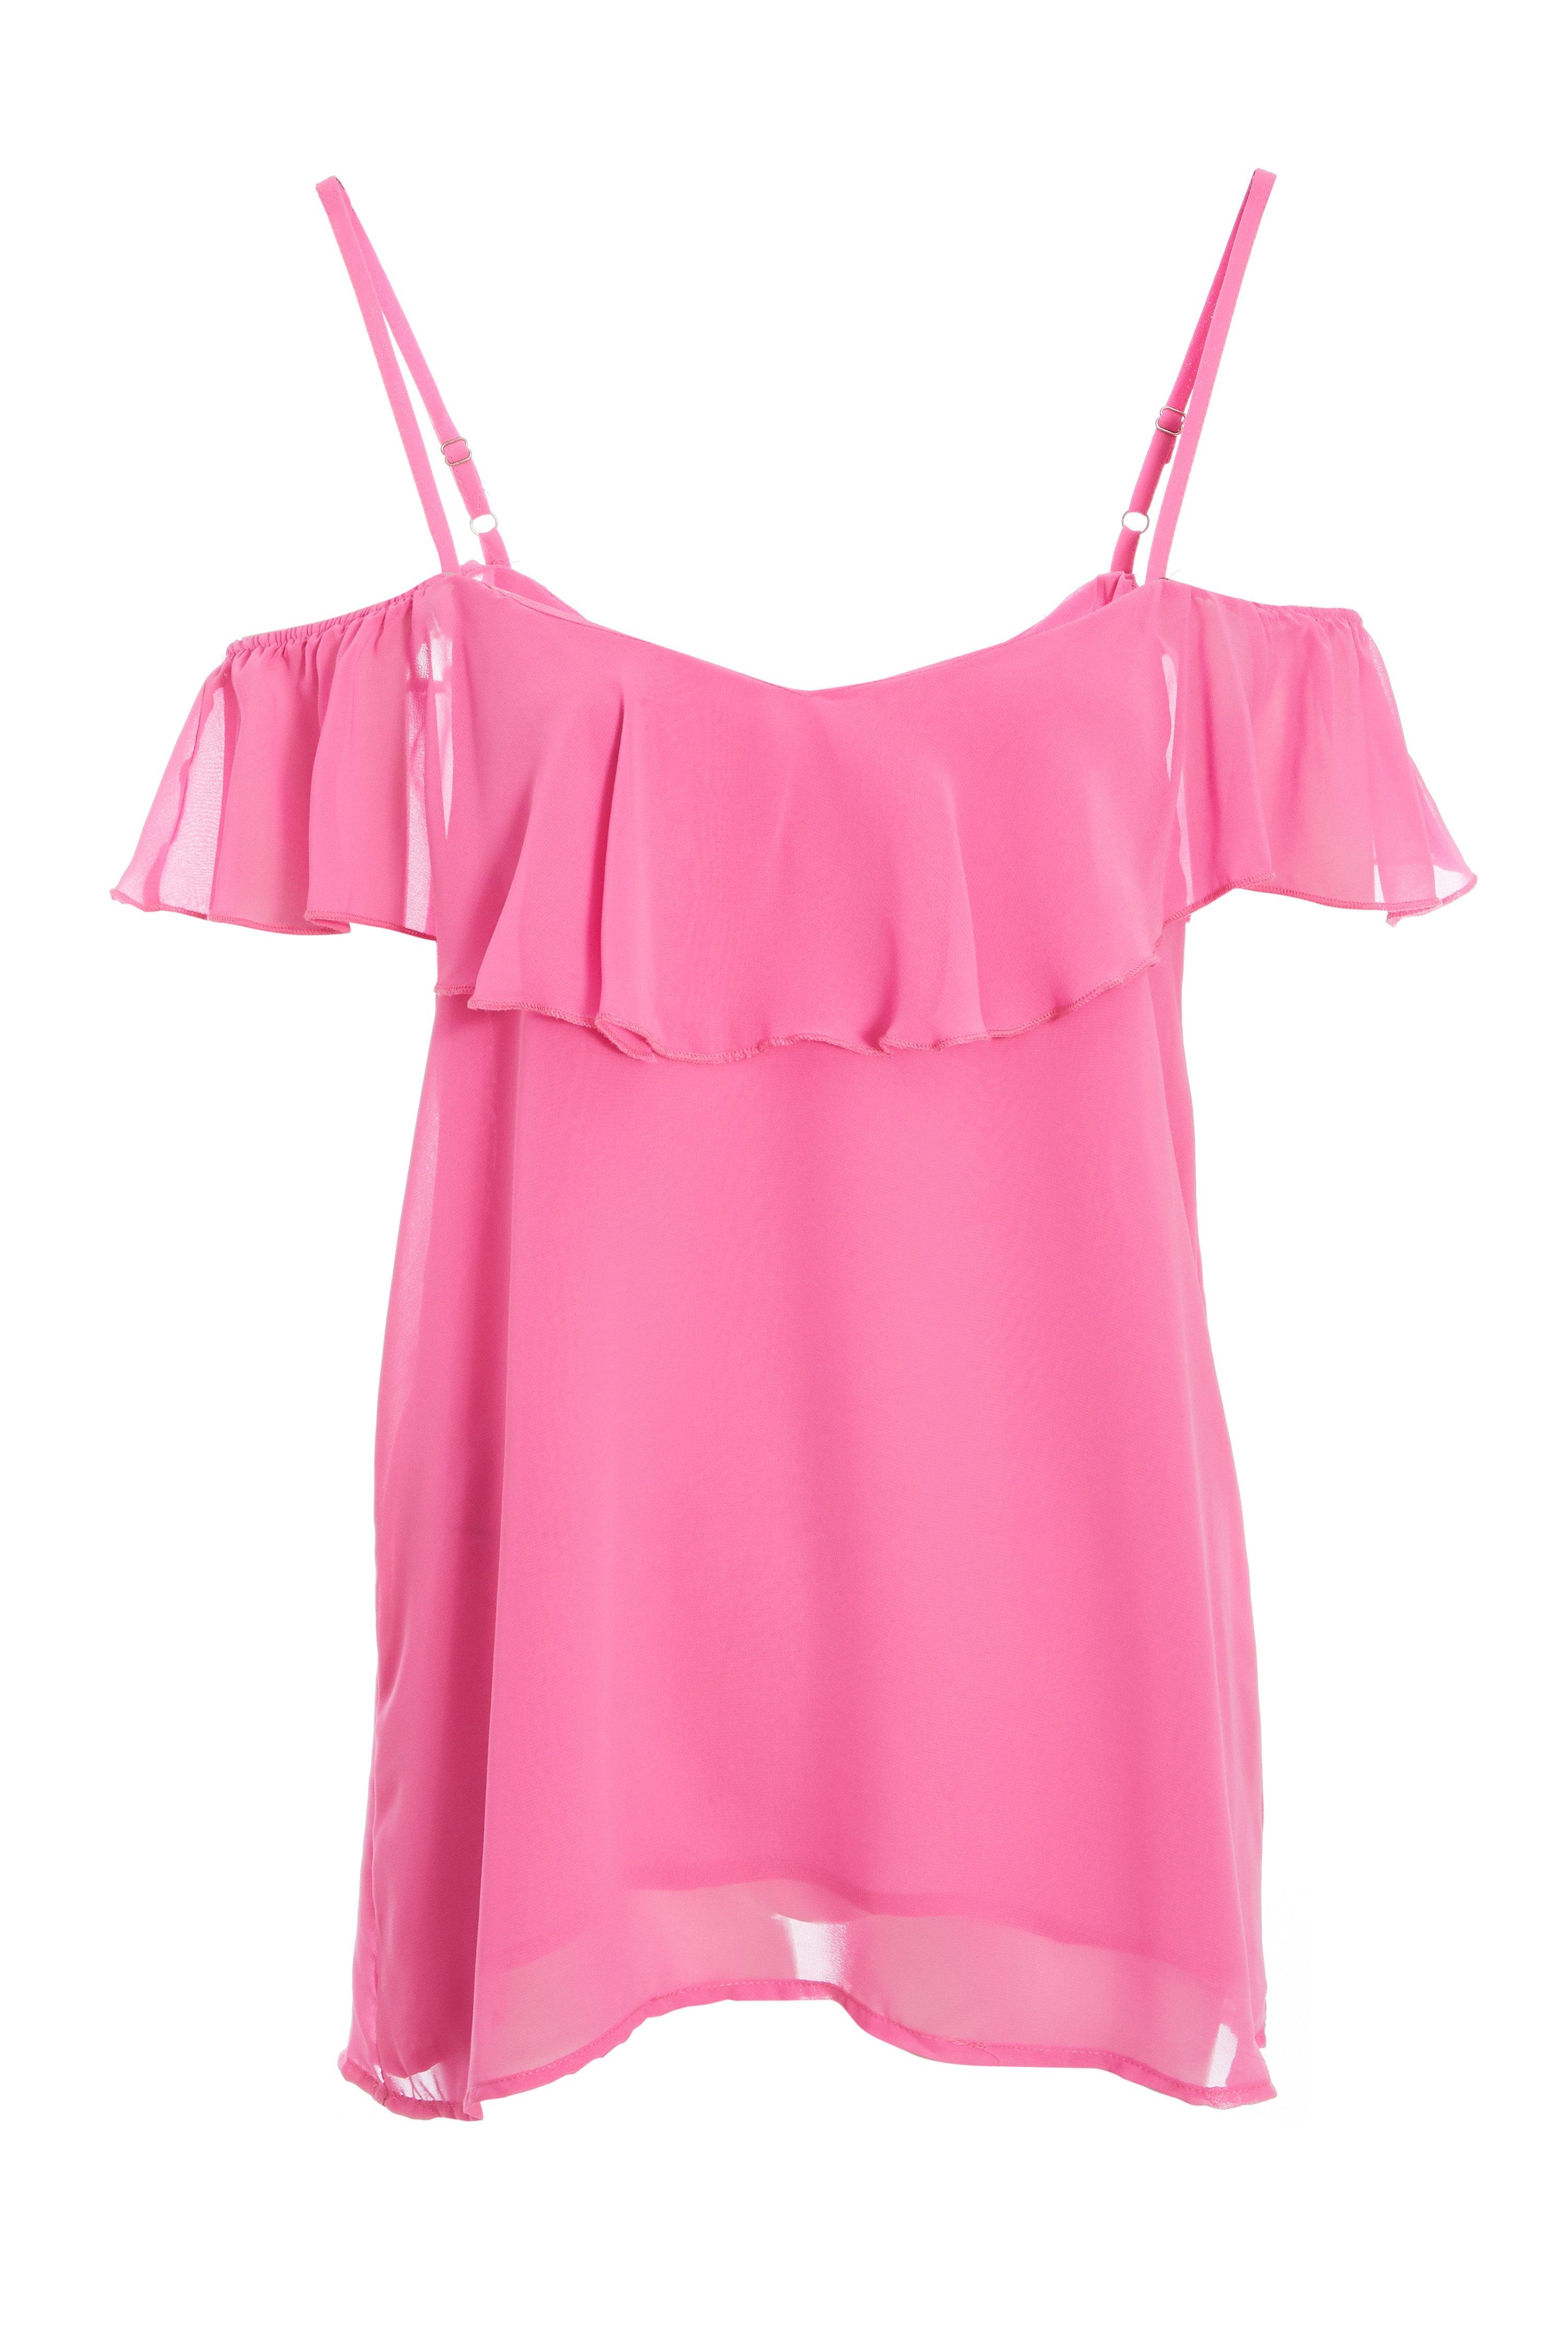 Pink Cold Shoulder Frill Top - Quiz Clothing